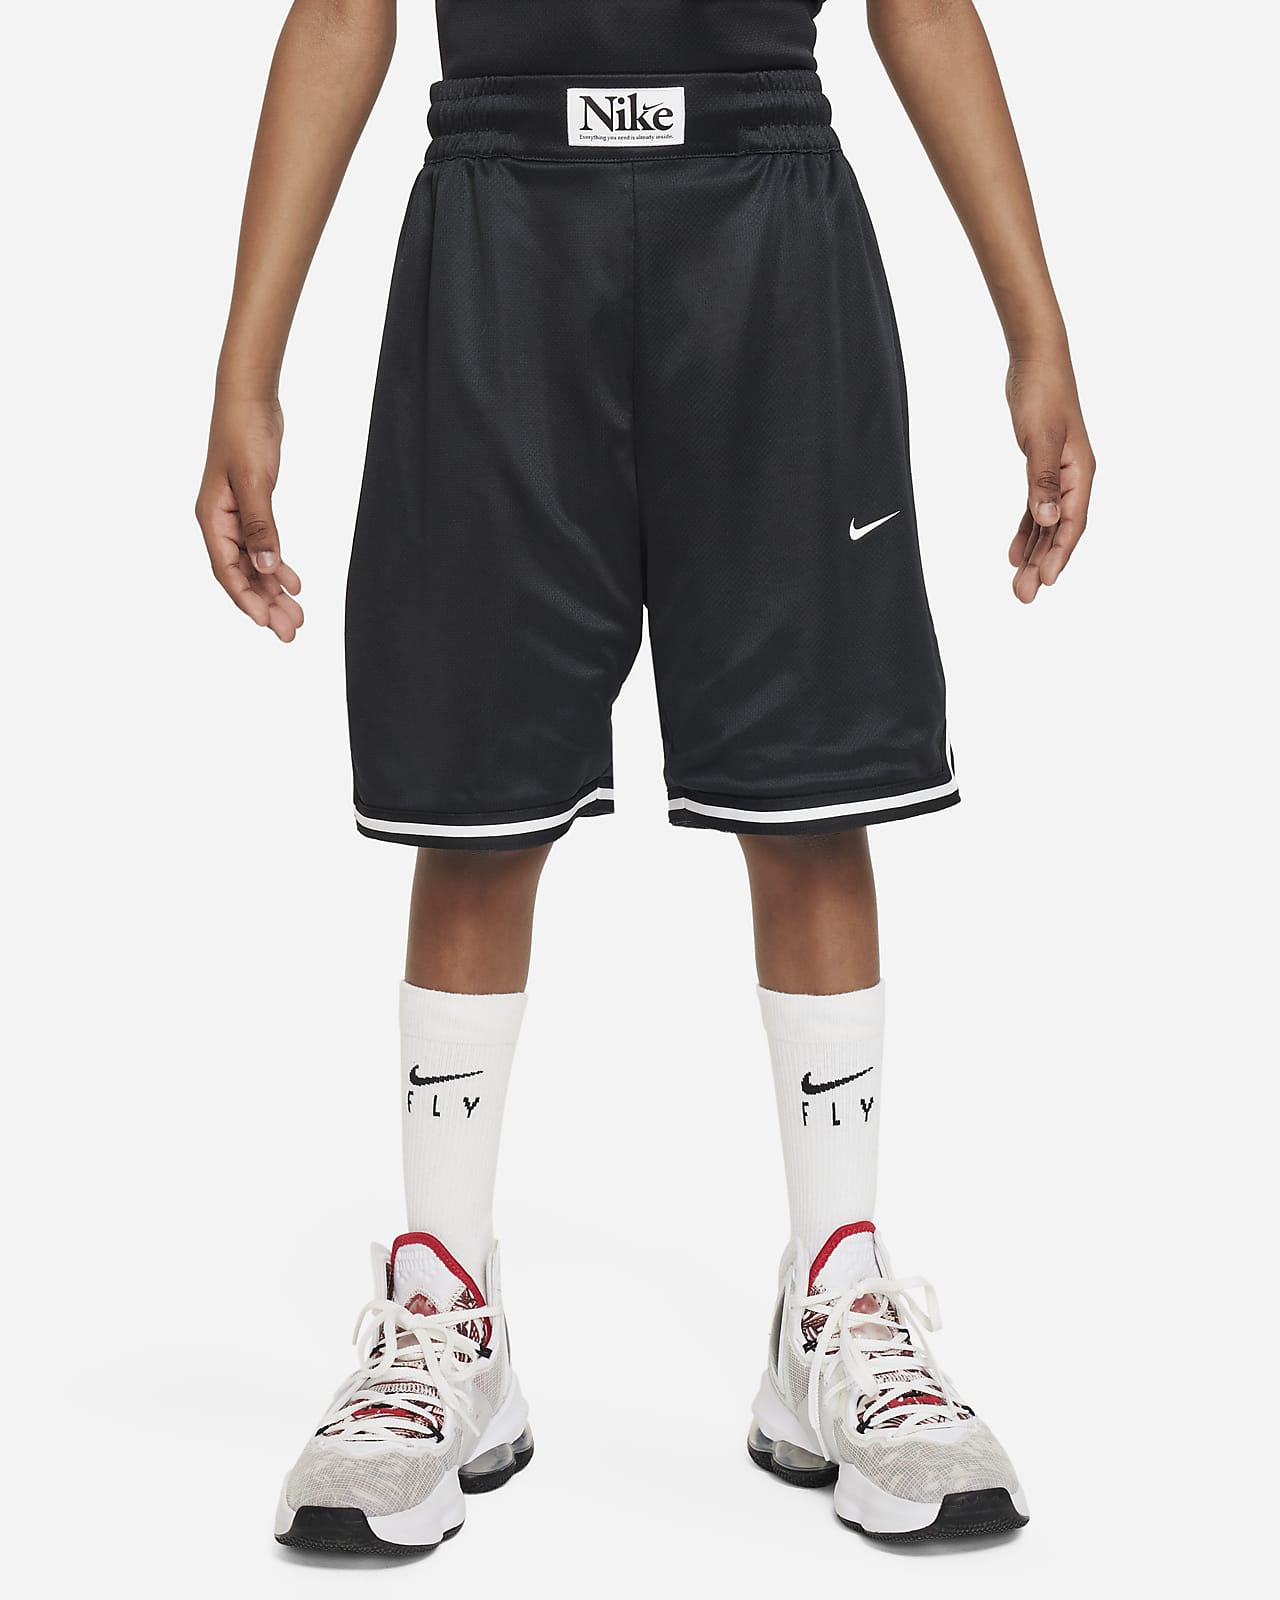 Nike Culture of Basketball DNA Big Kids' Reversible Basketball Shorts